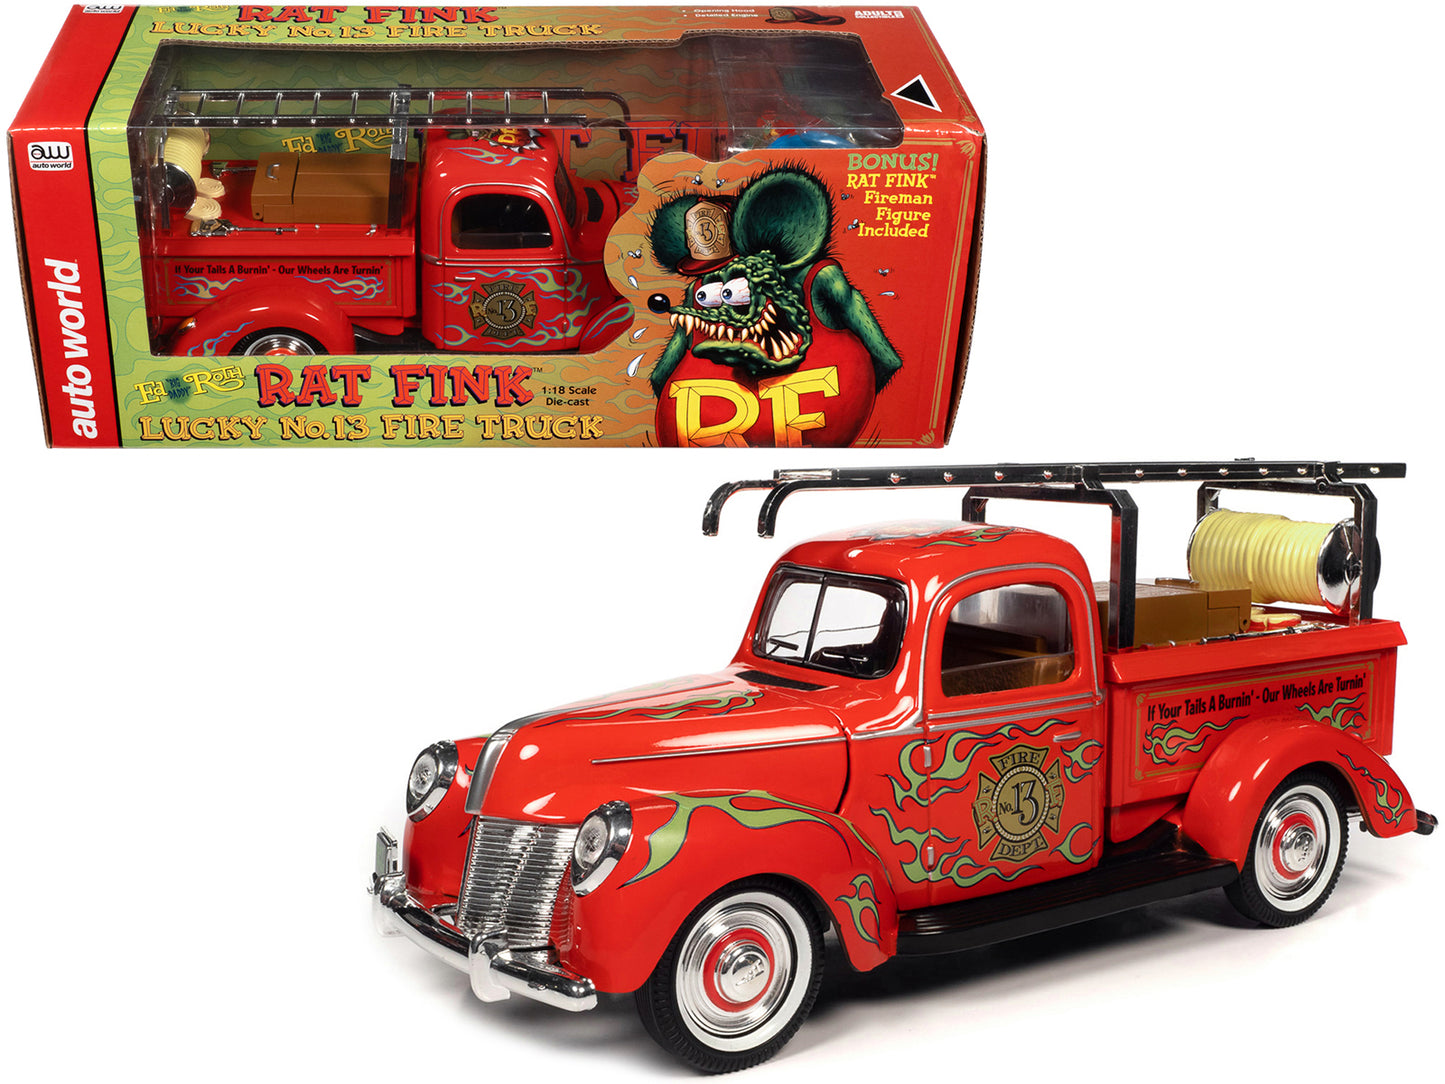 rat fink engine truck firefighter resin figure 1/18 diecast model car